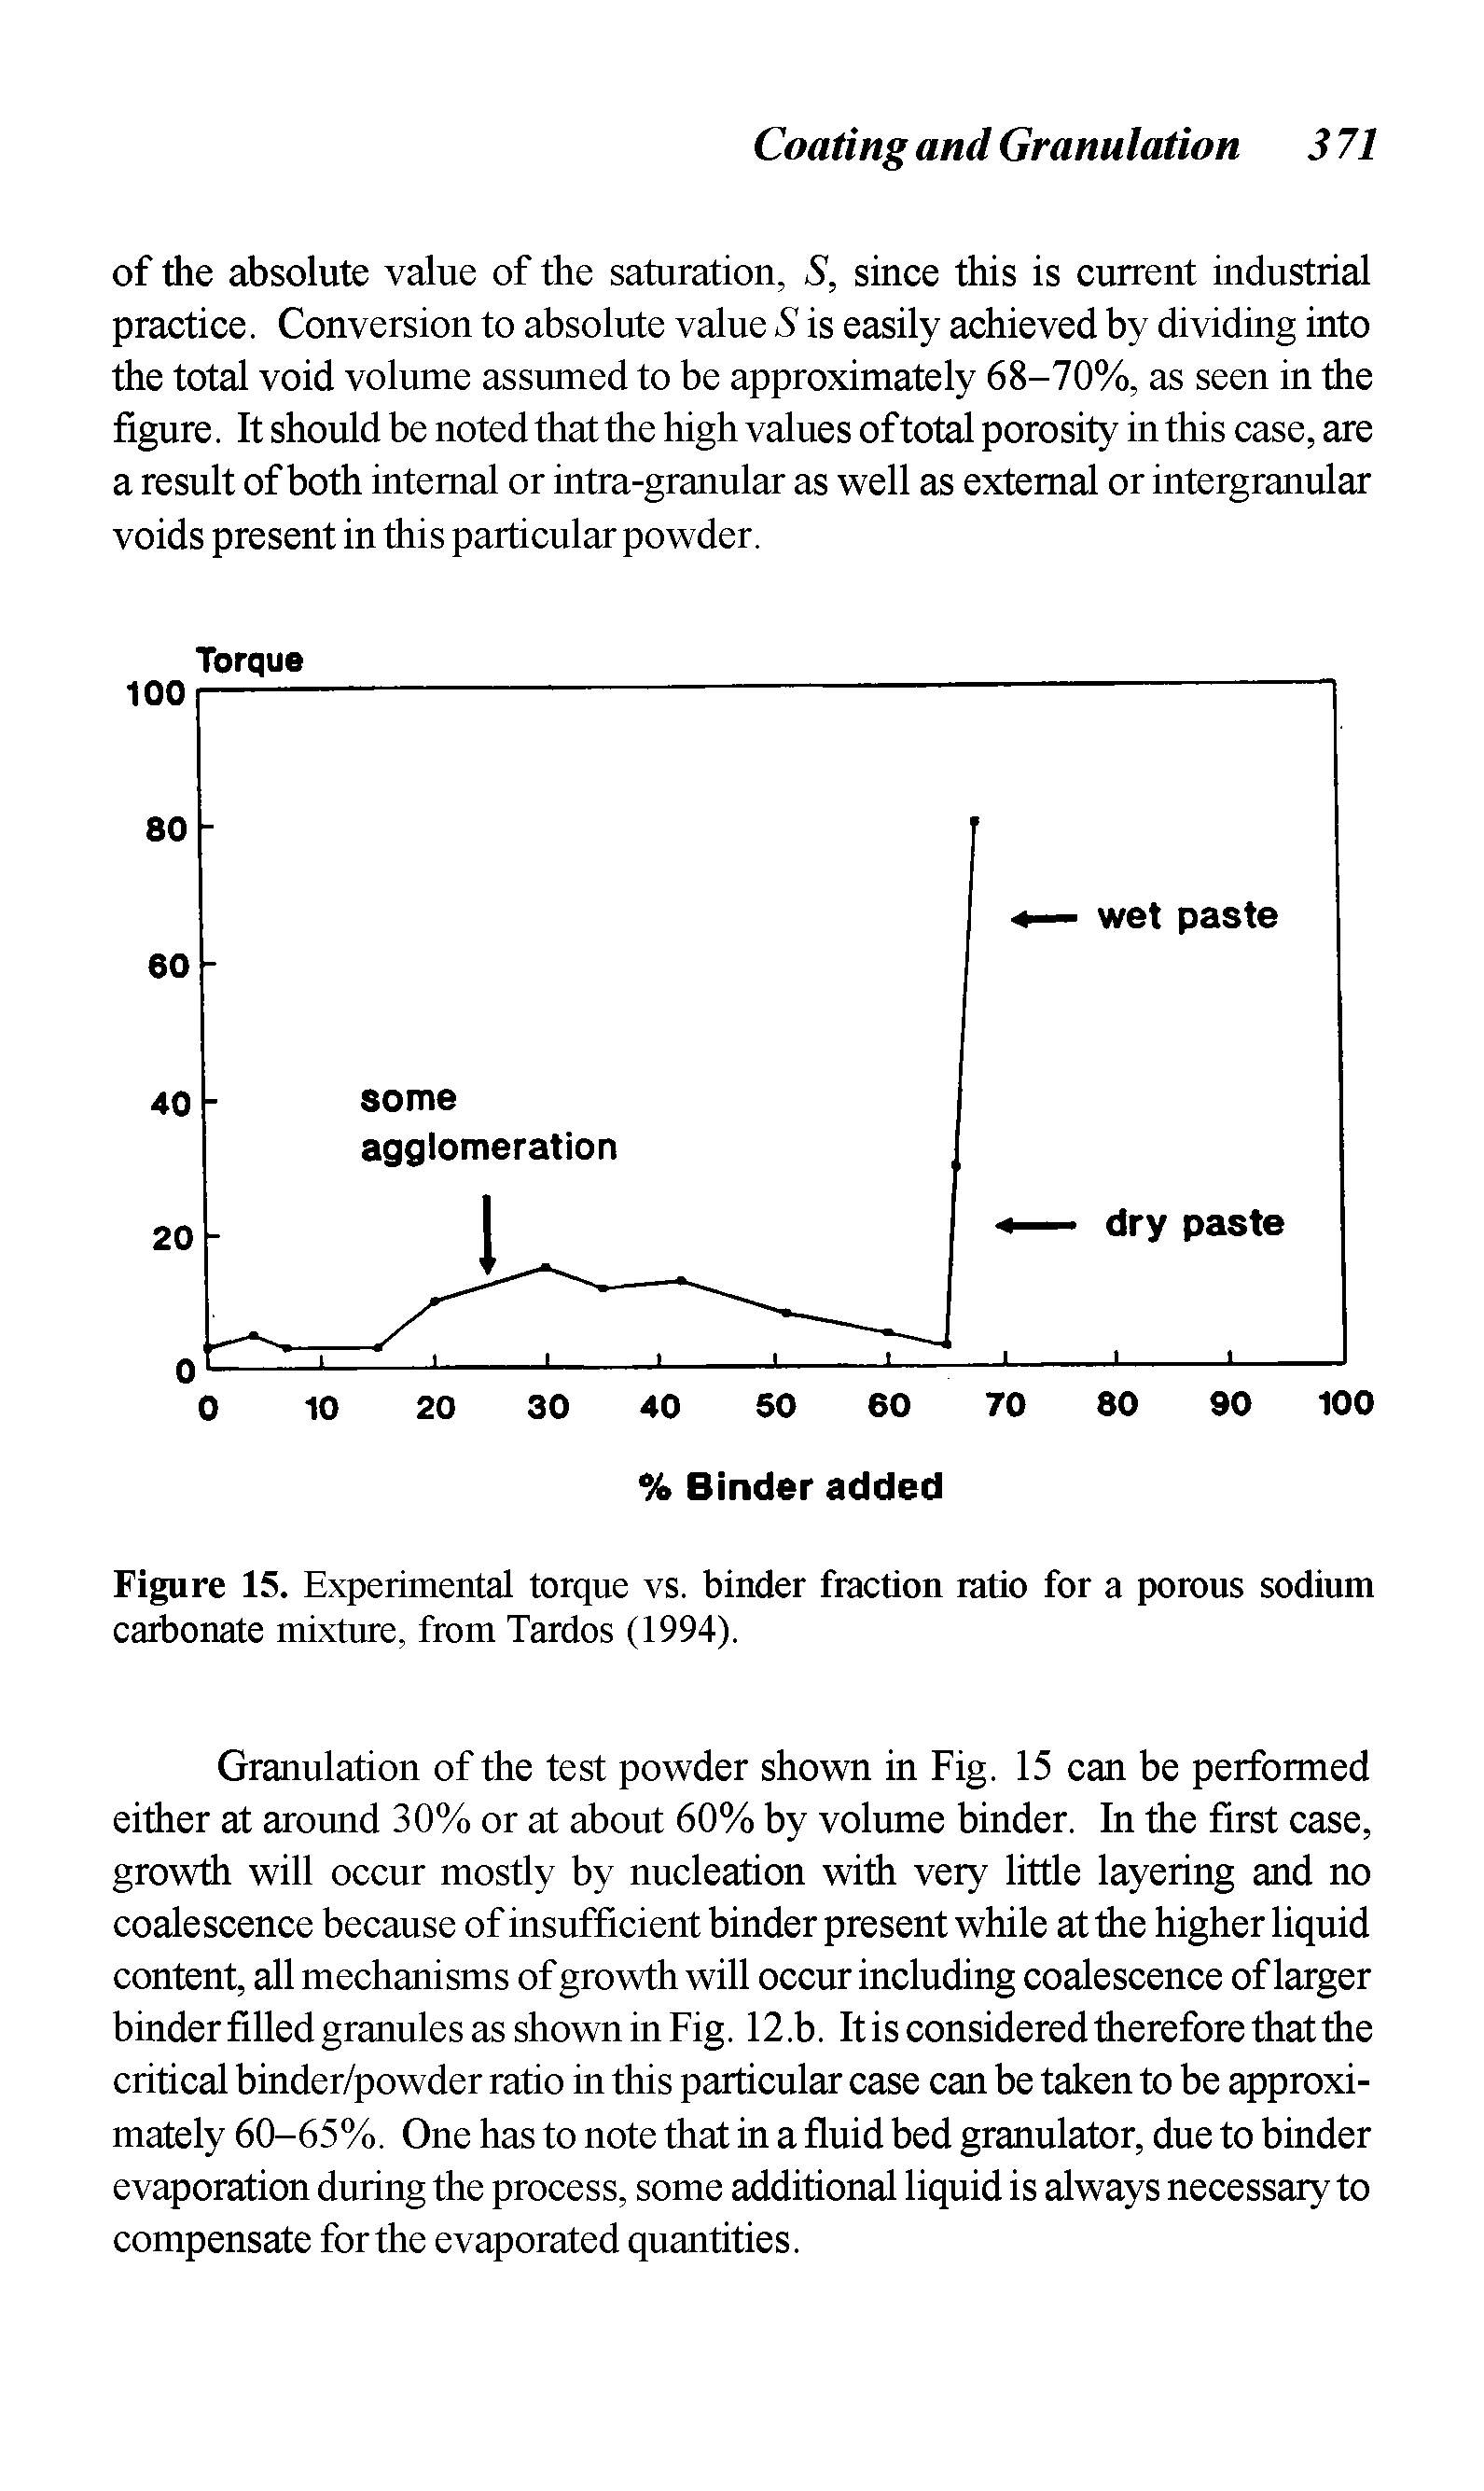 Figure 15. Experimental torque vs. binder fraction ratio for a porous sodium carbonate mixture, from Tardos (1994).